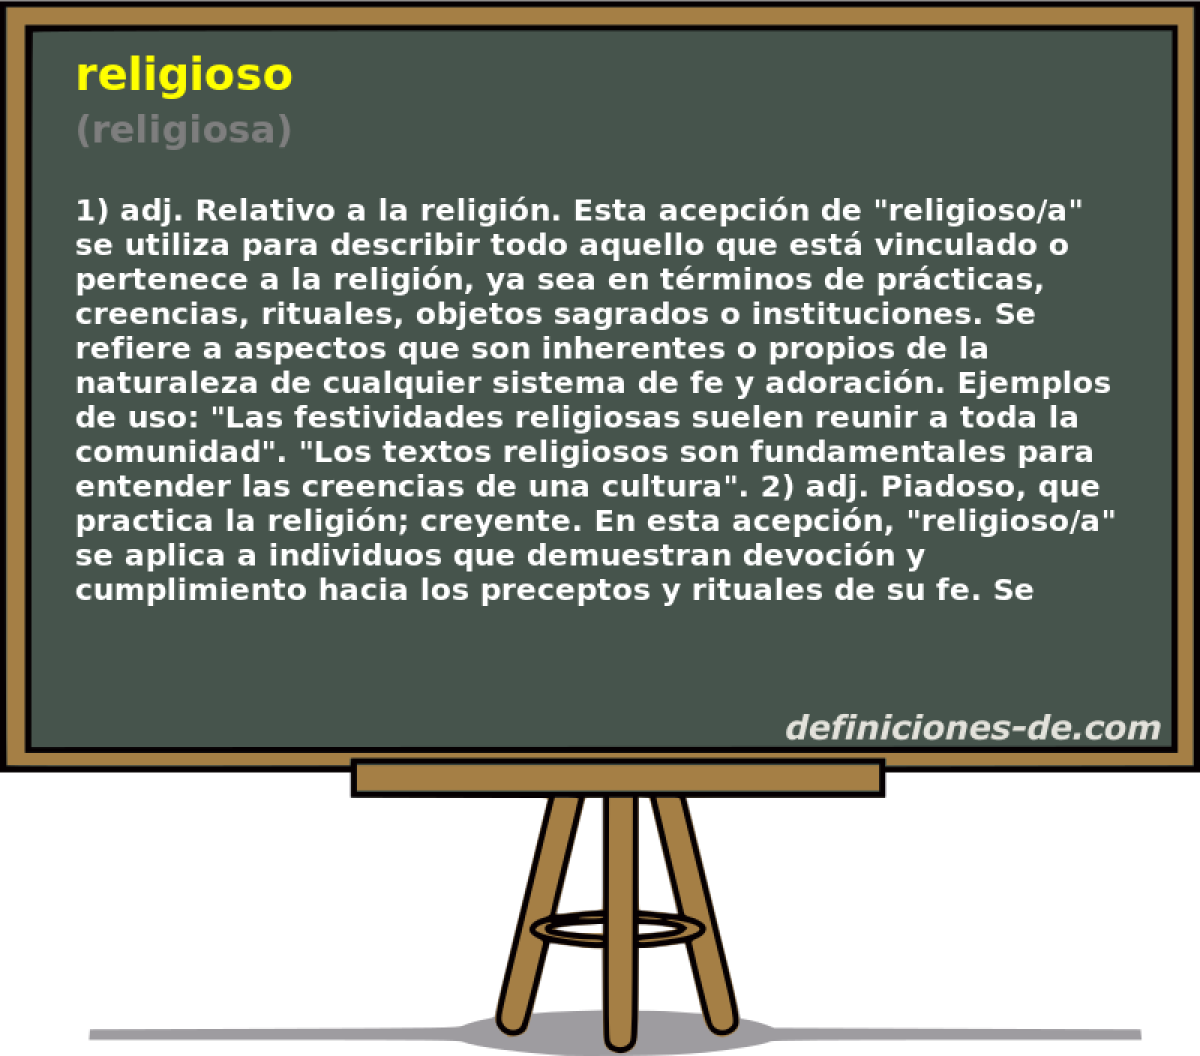 religioso (religiosa)